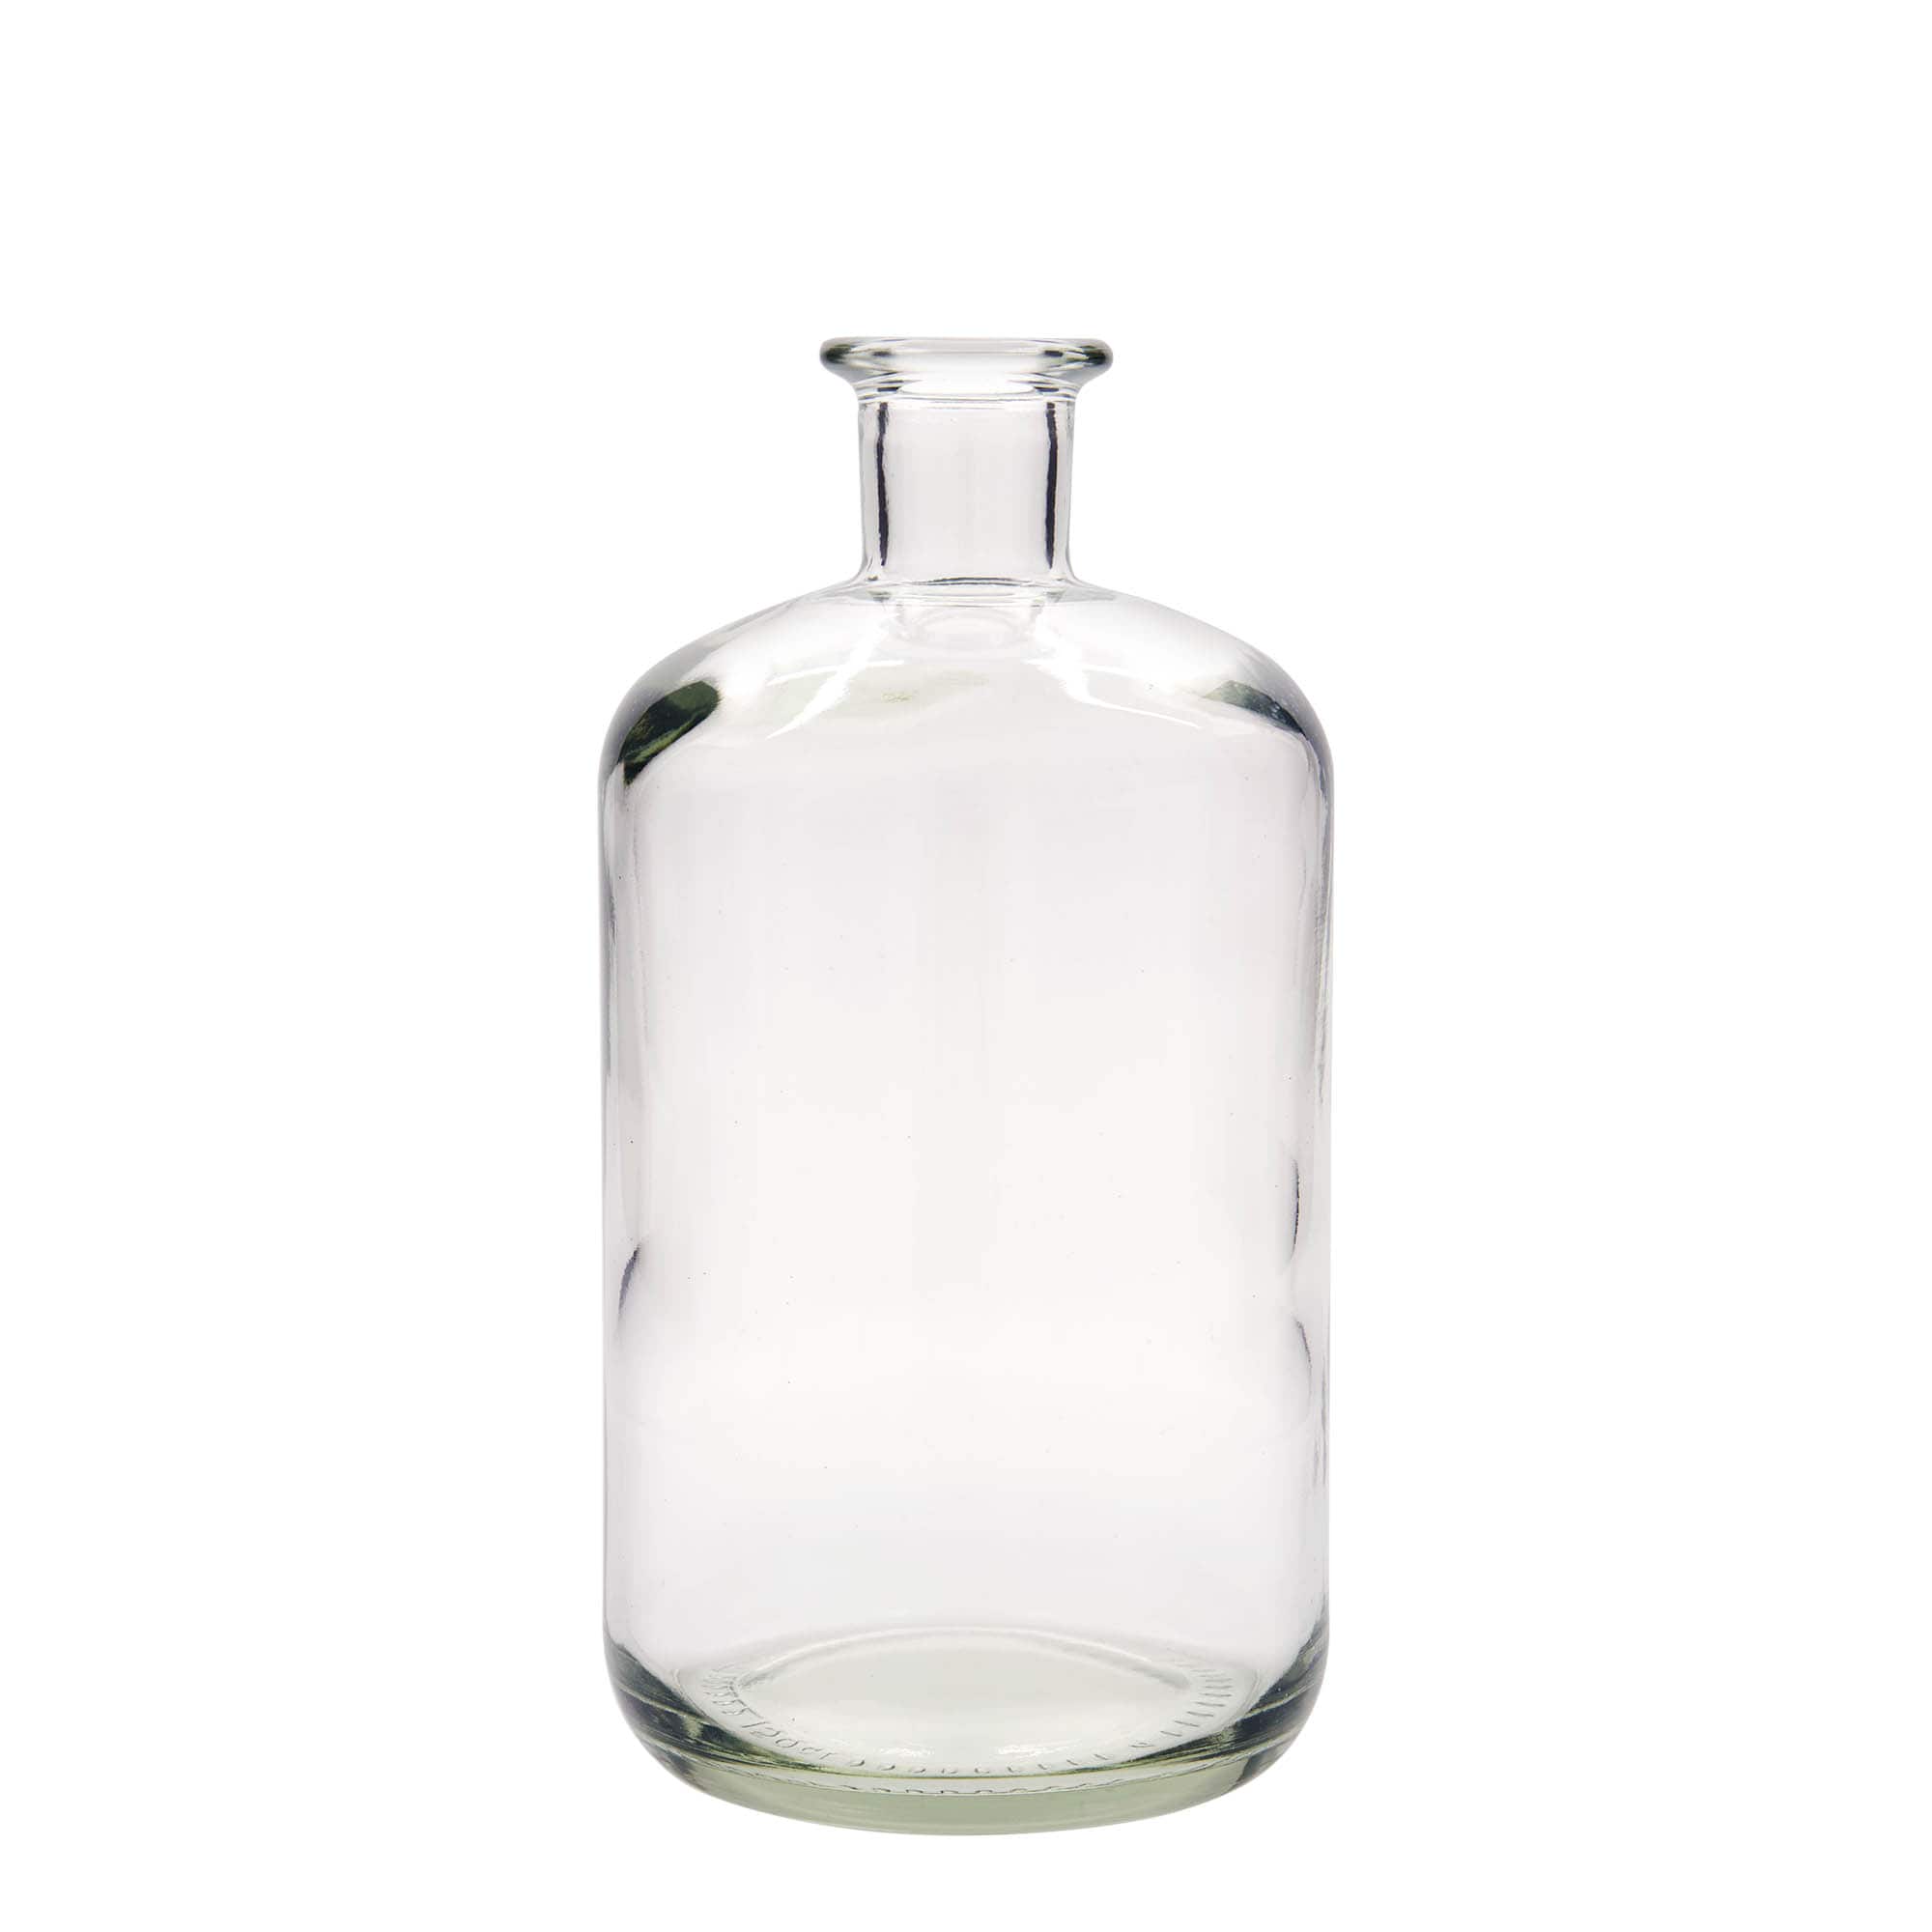 1,500 ml glass apothecary bottle, closure: cork